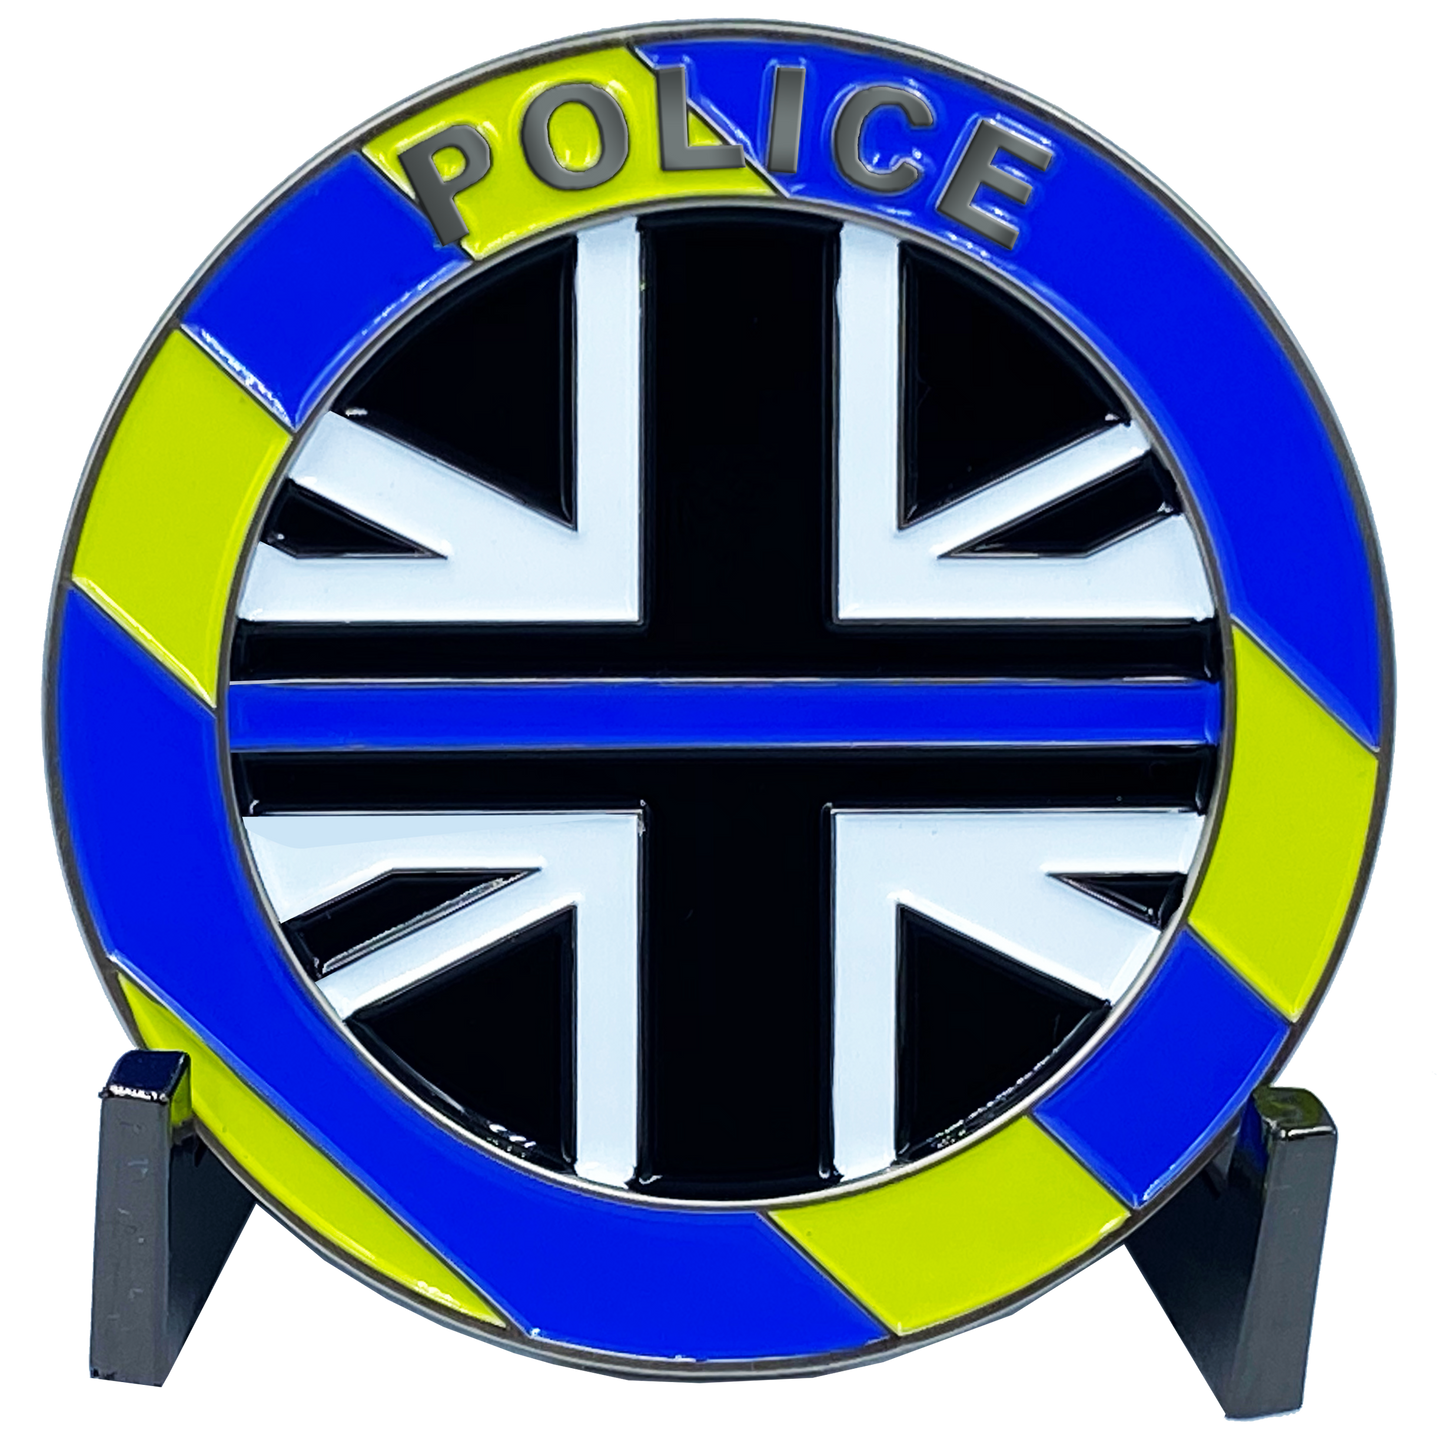 EE-006 UK British Thin Blue Line England Great Britain London Police Challenge Coin hat British Bobby Helmet